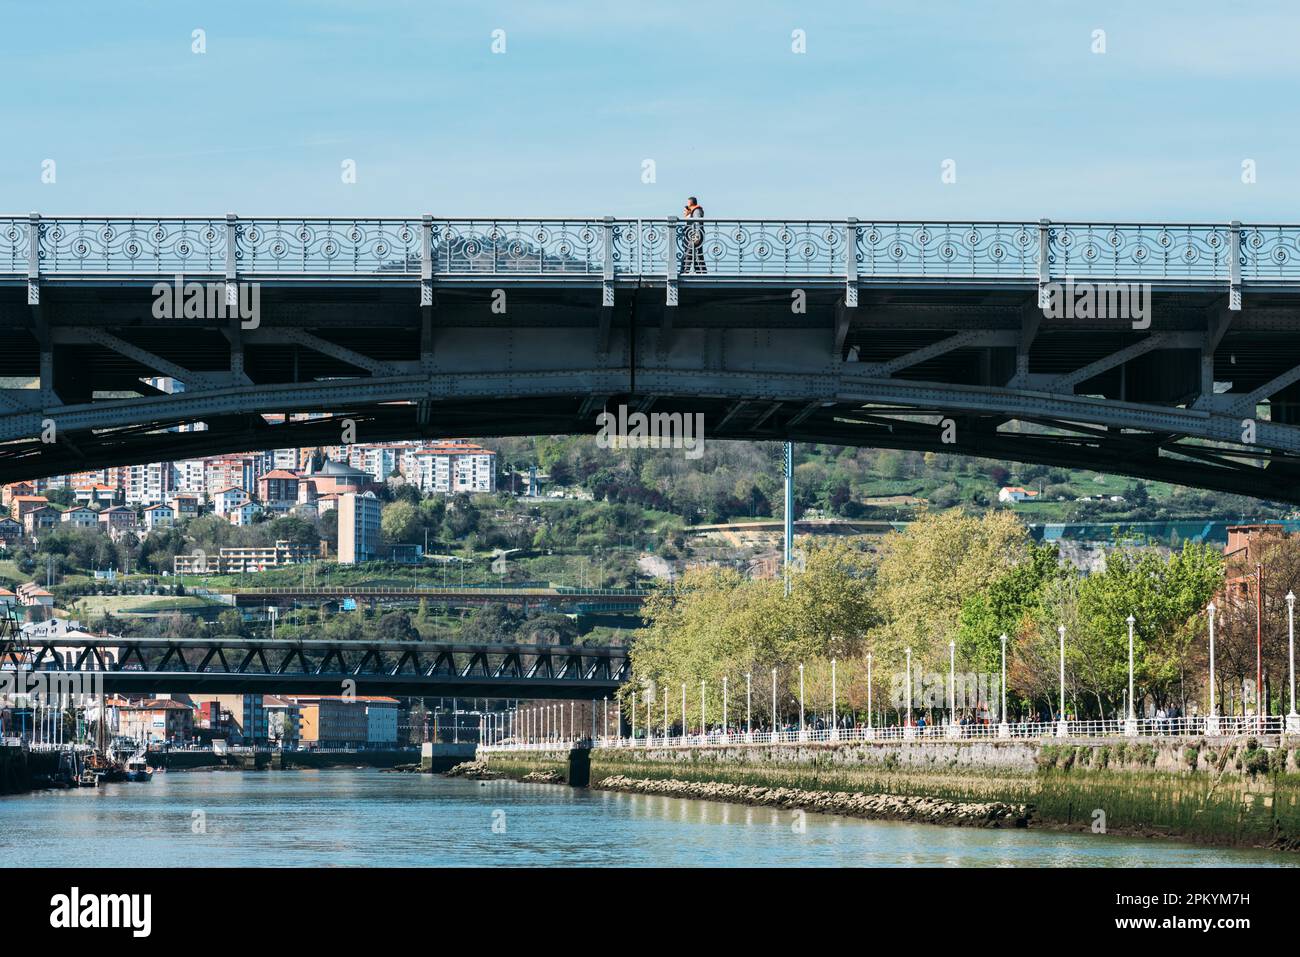 Bilbao, Spain - April 7, 2023: View of pedestrians crossing the Deustuko Zubia Bridge on the River Nerion in Bilbao, Spain Stock Photo